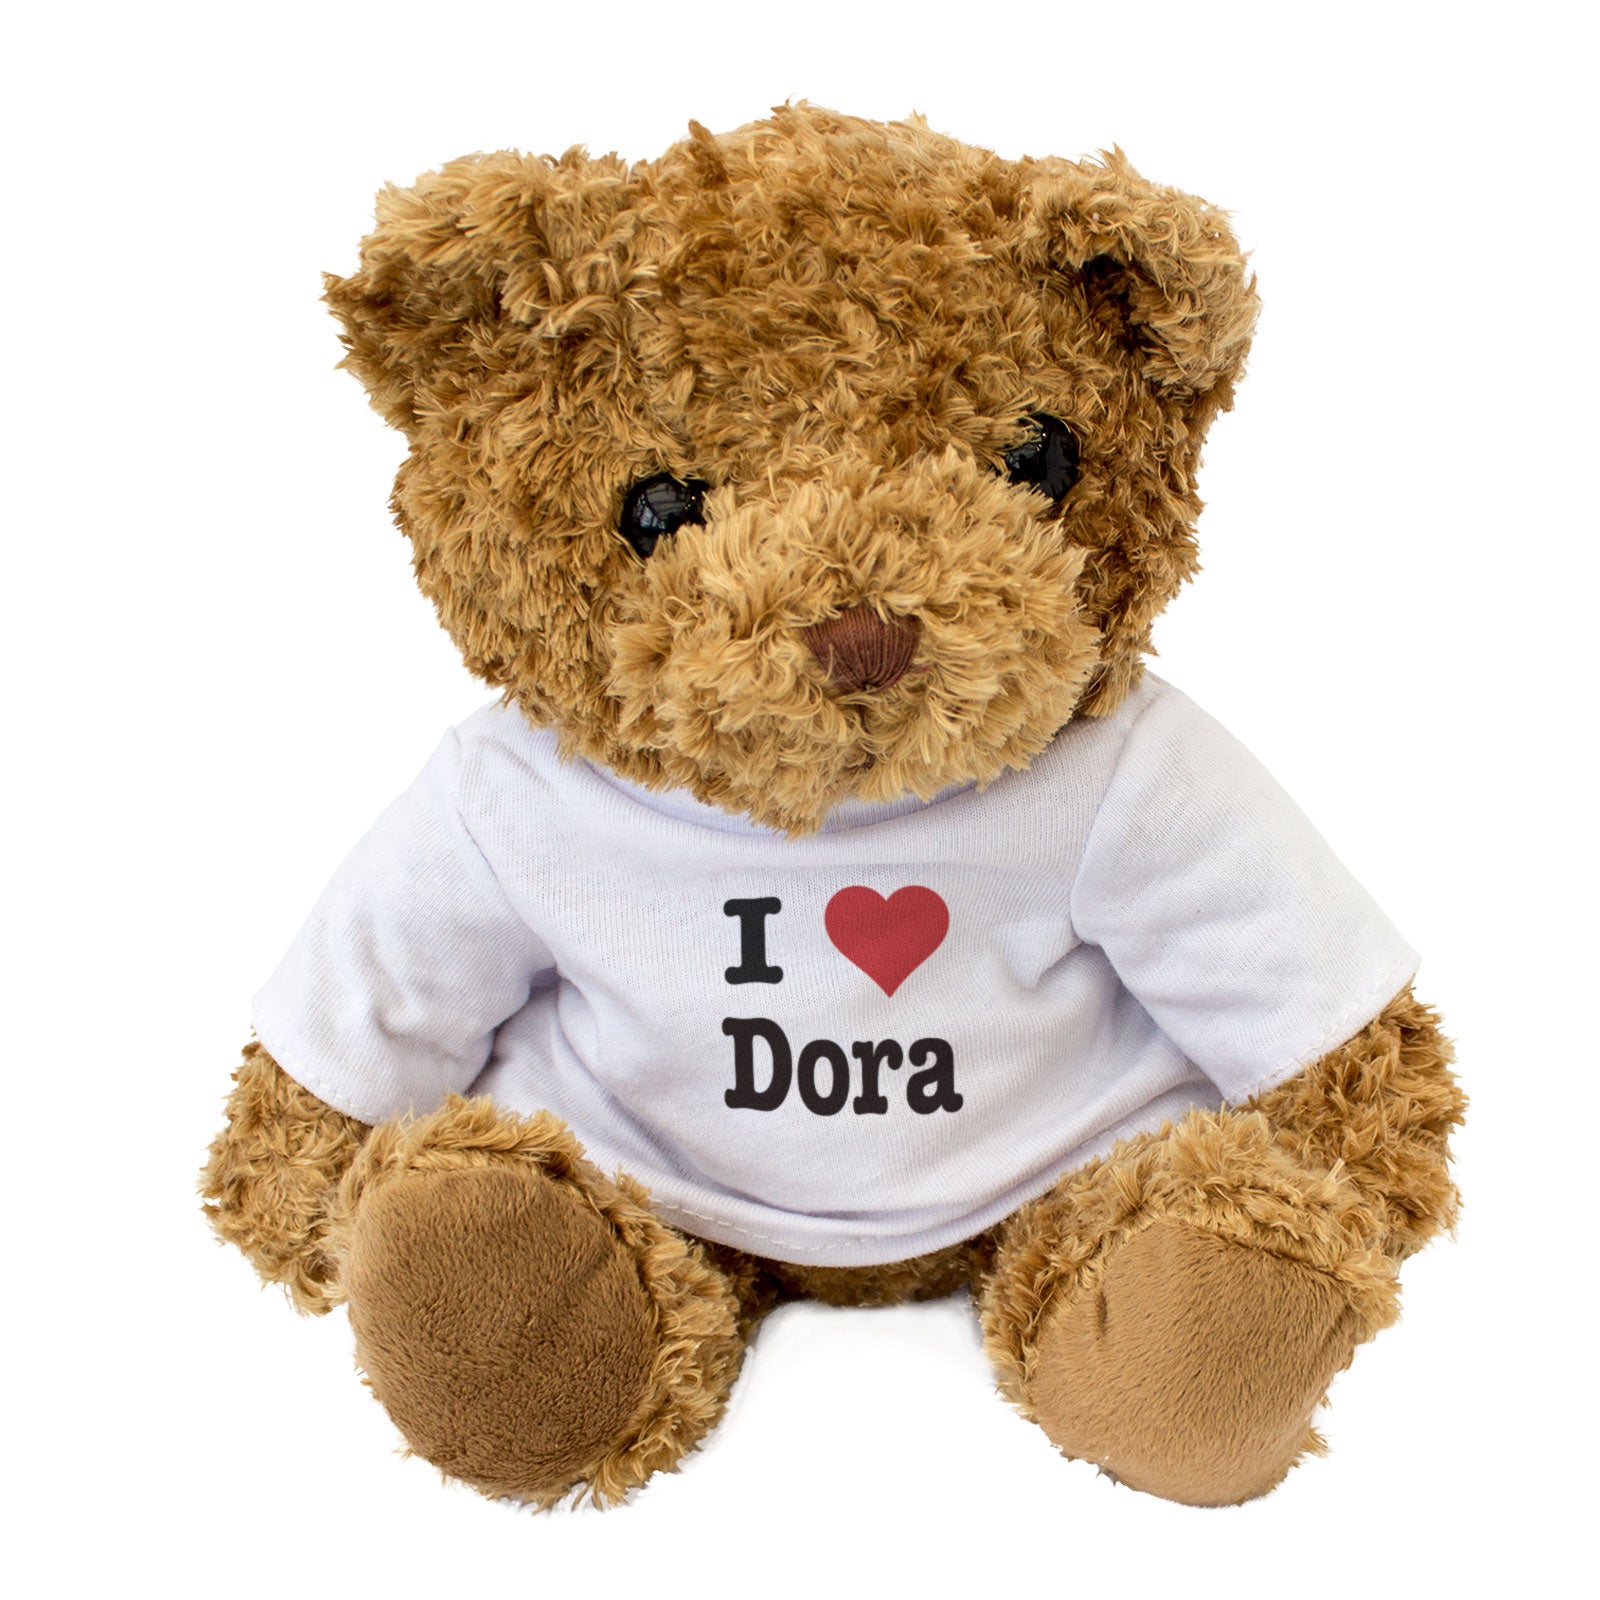 I Love Dora - Teddy Bear